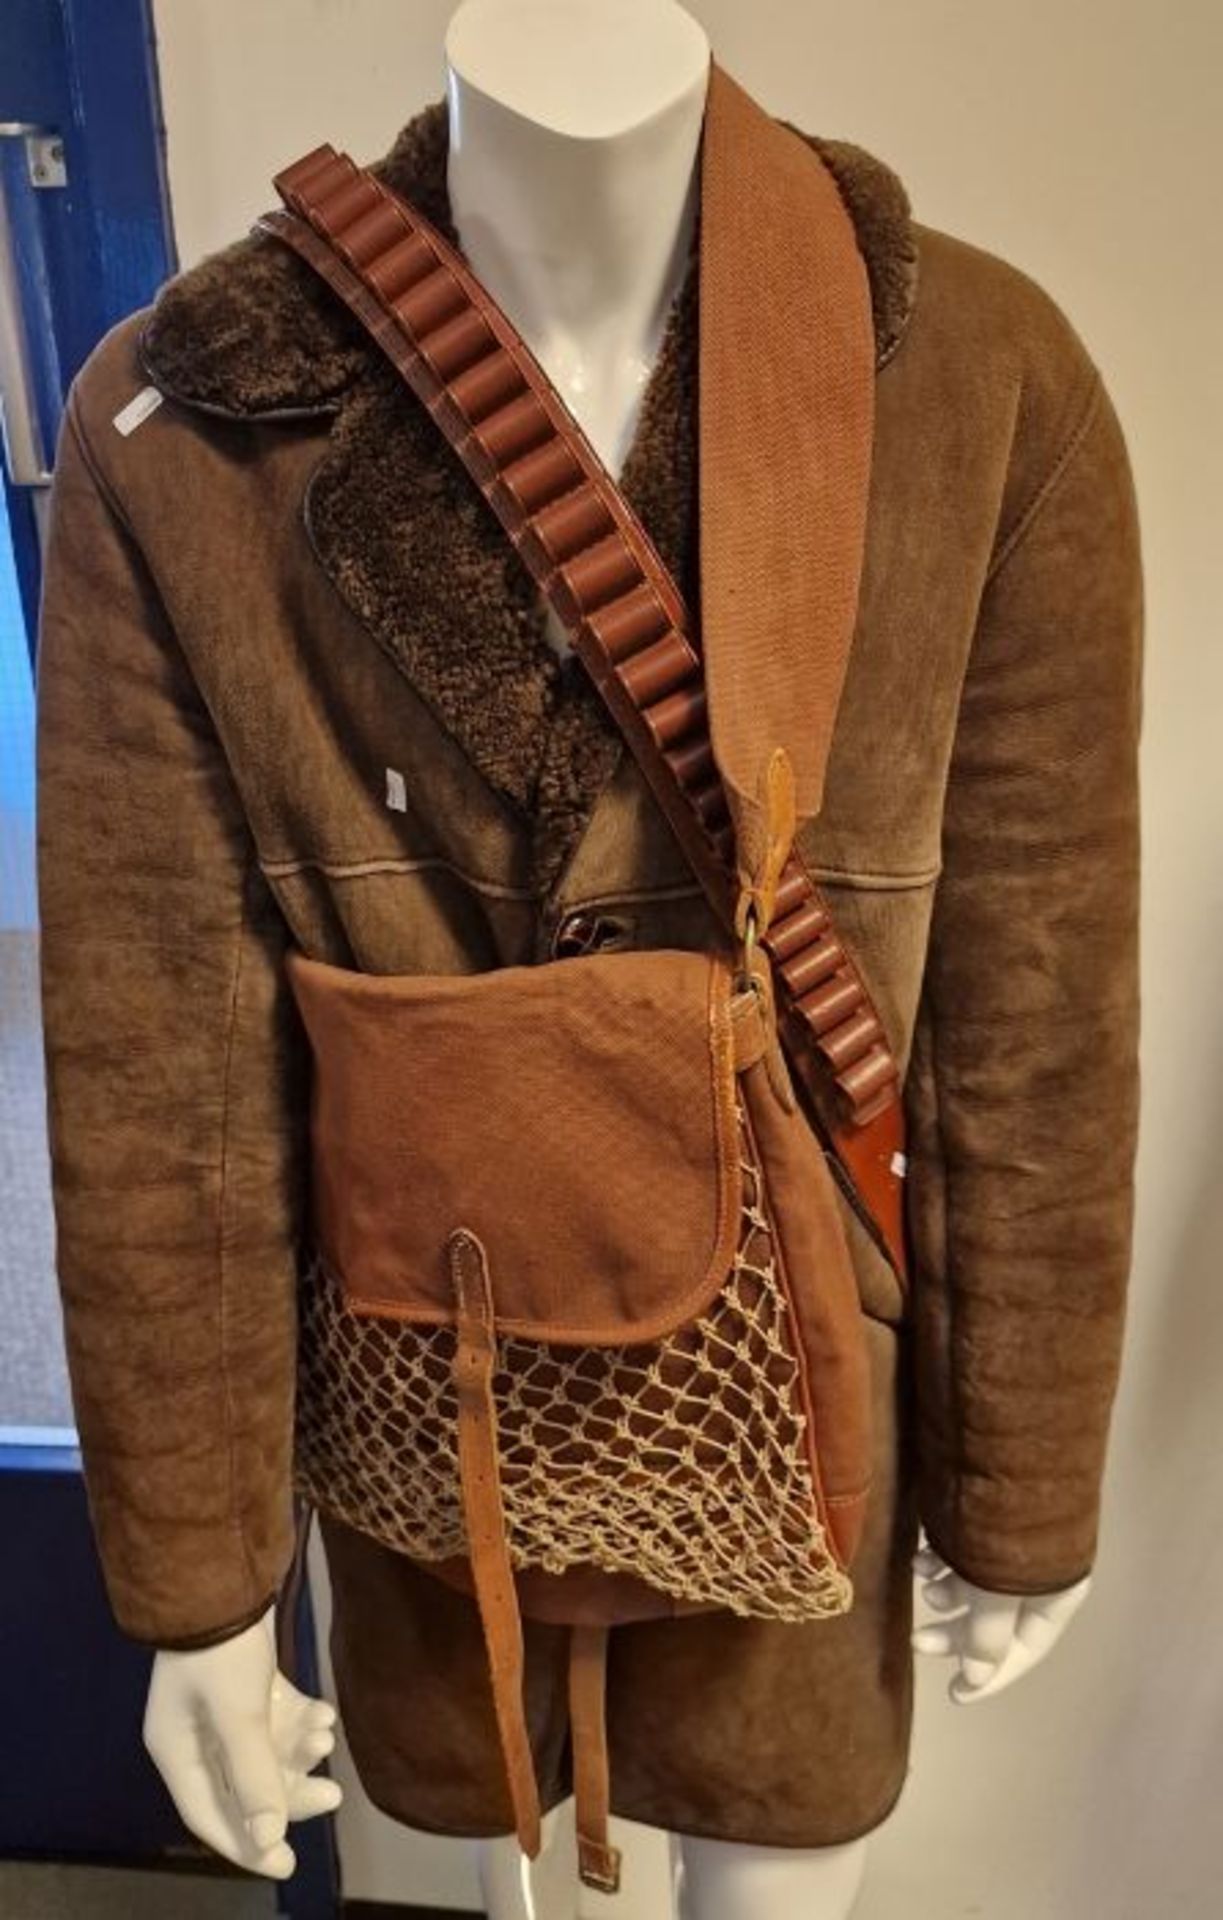 Brady canvas game bag, a shotgun cartridge belt and a vintage sheepskin coat (3)